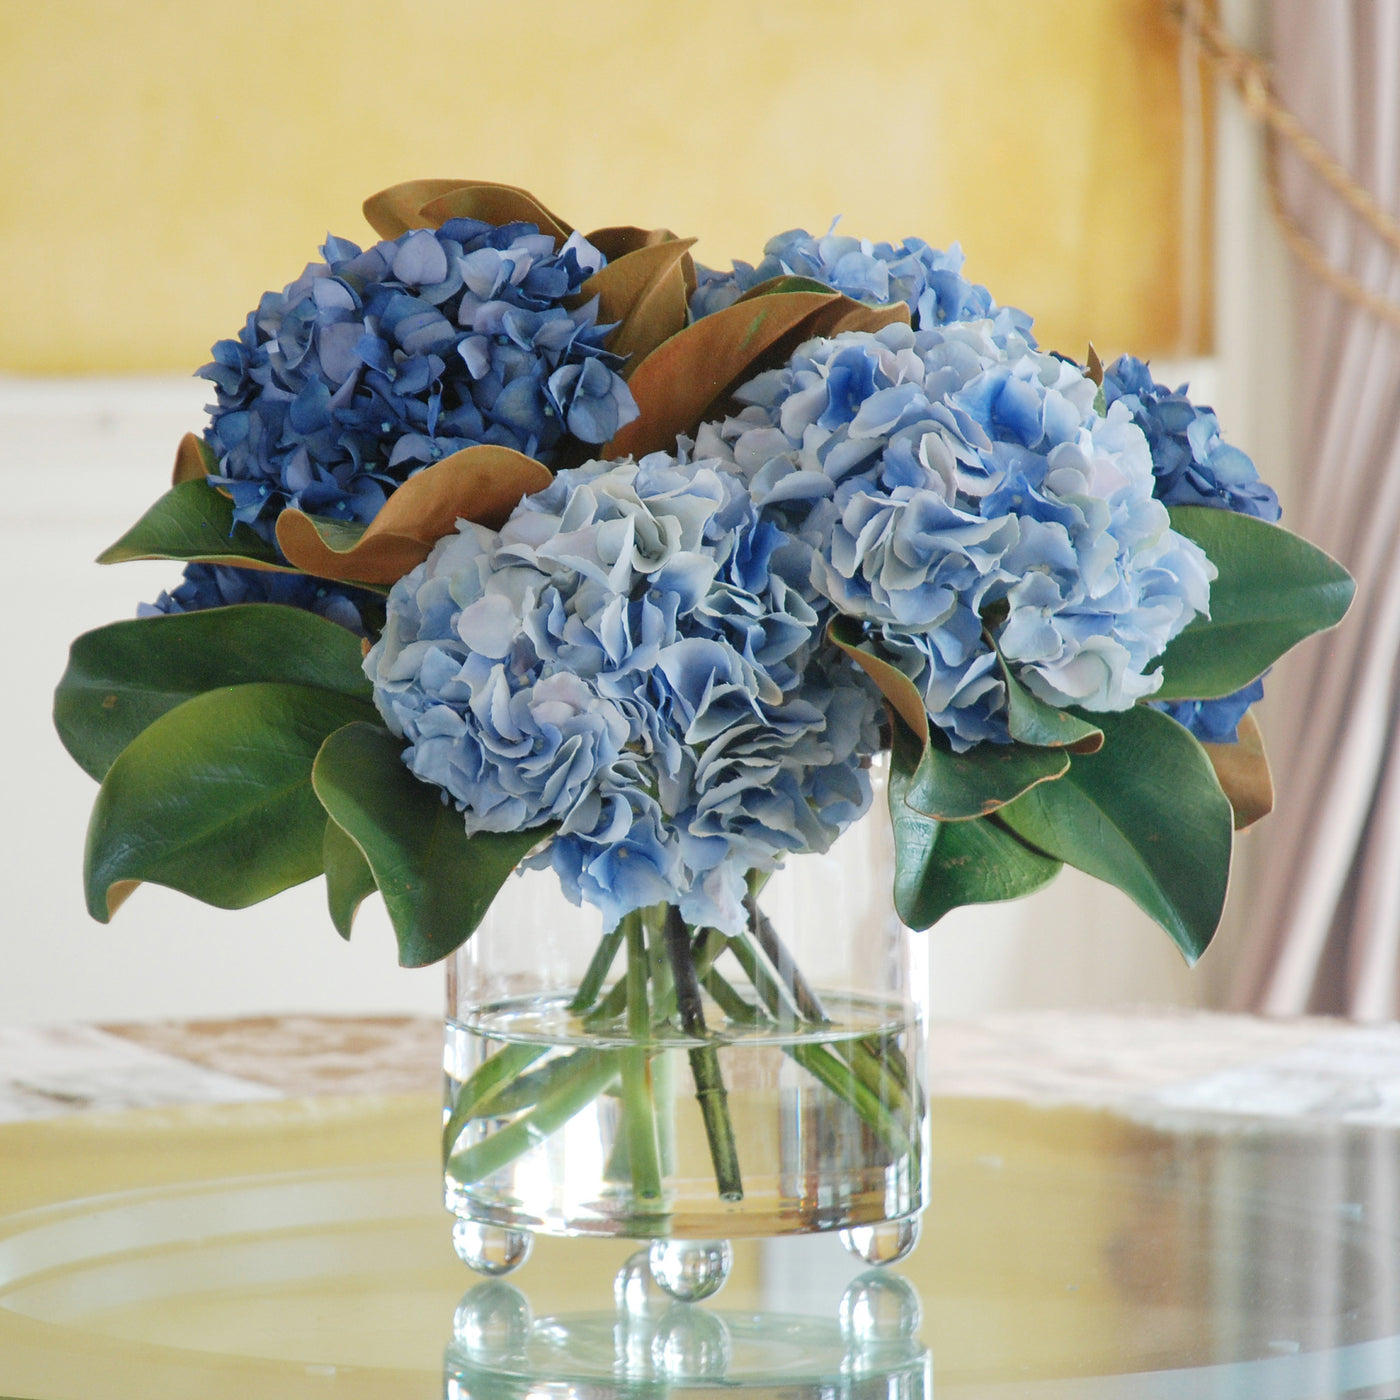 Artificial blue hydrangeas in glass vase